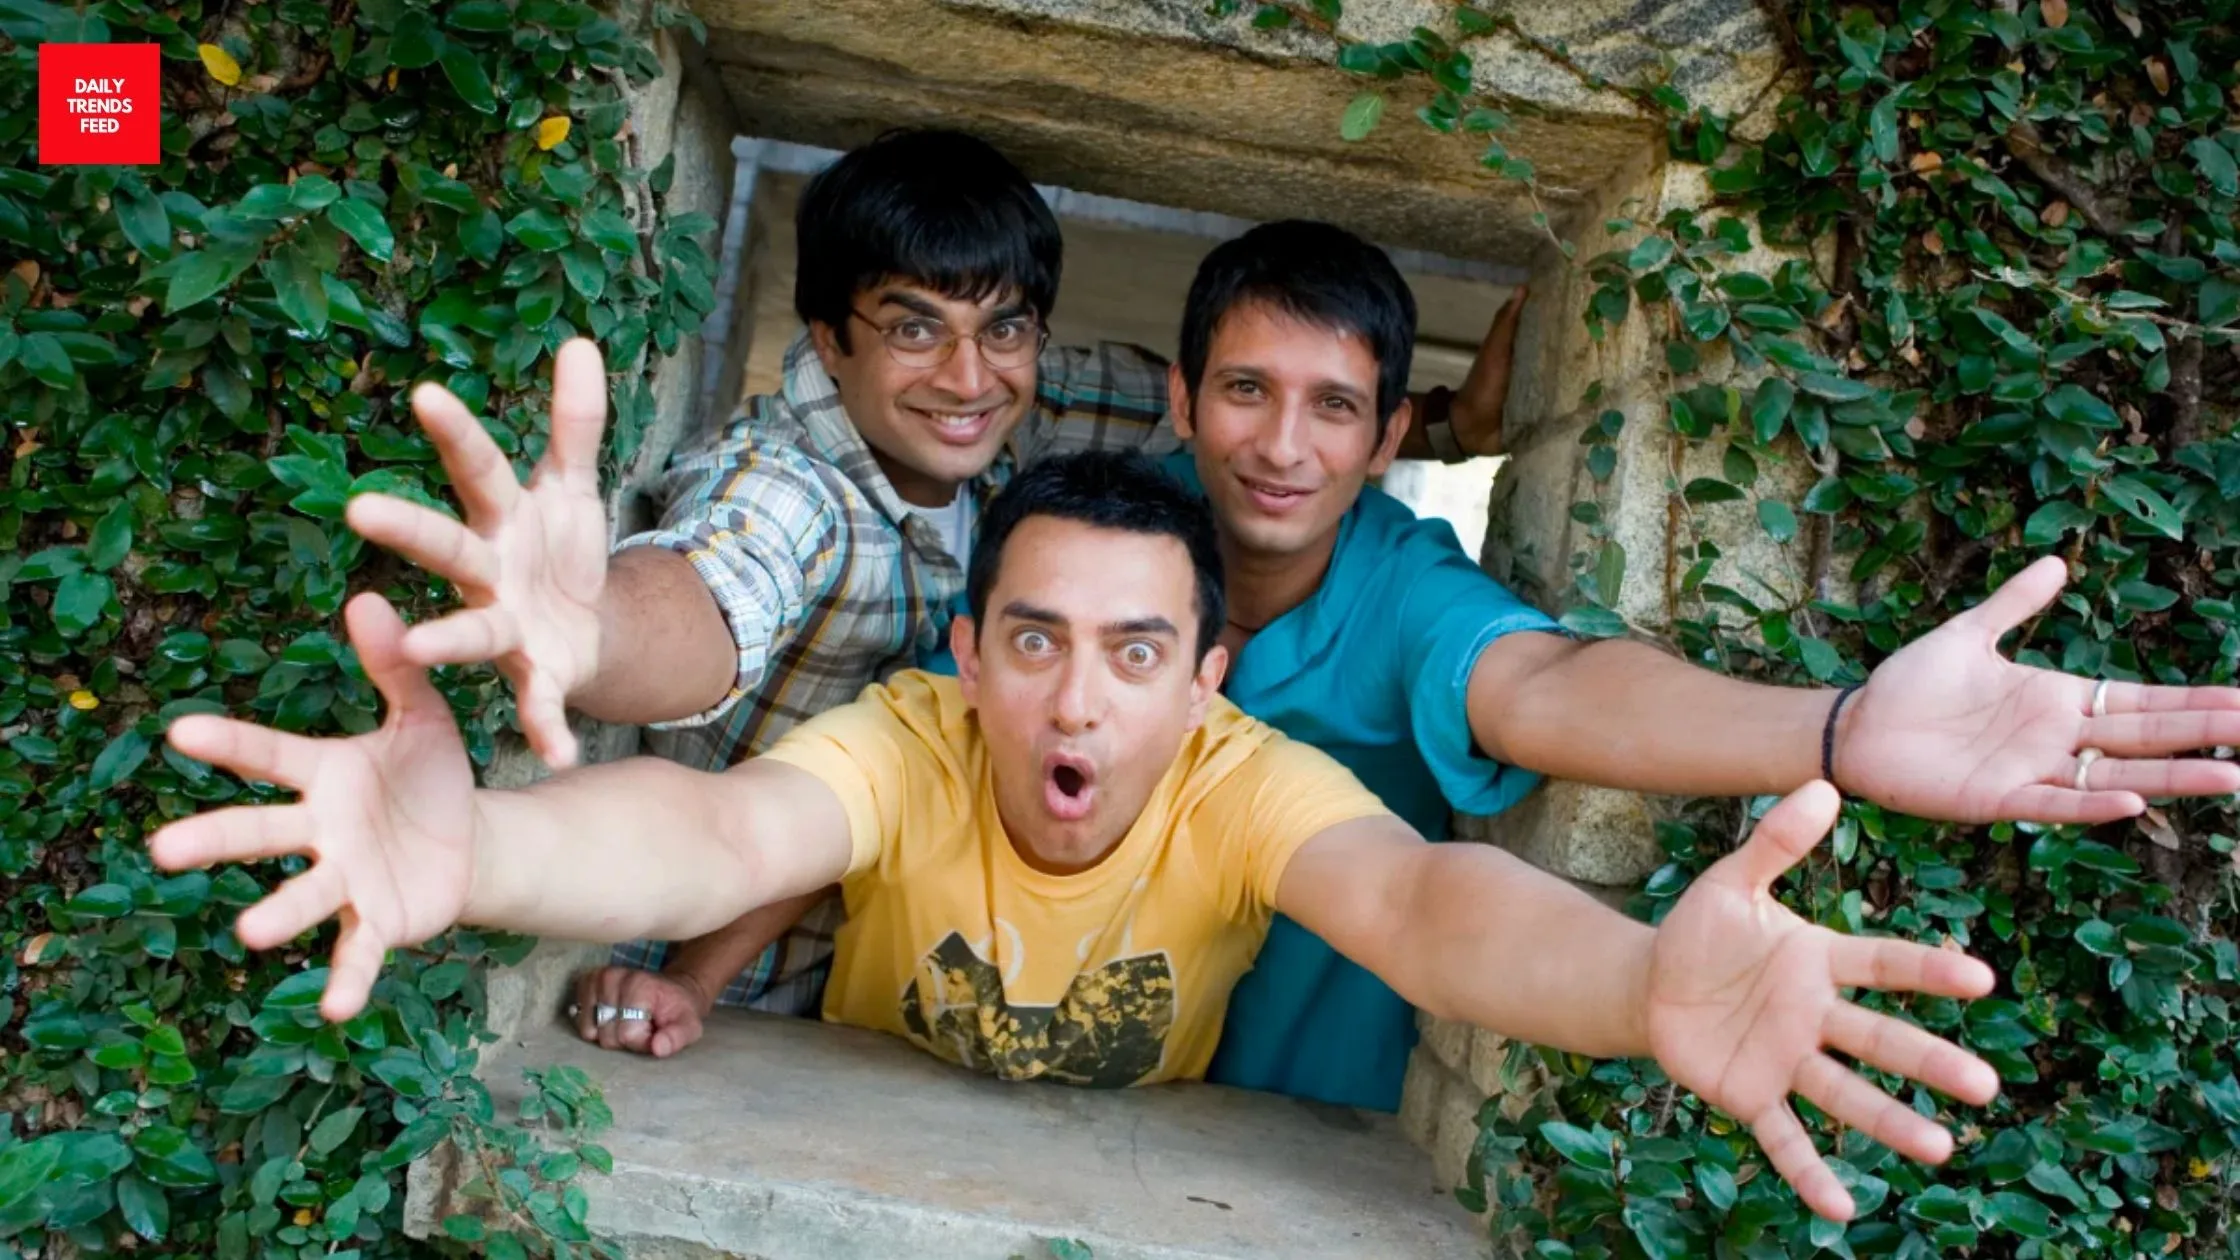 Comedy Hindi Movies On Amazon Prime: 3 Idiots